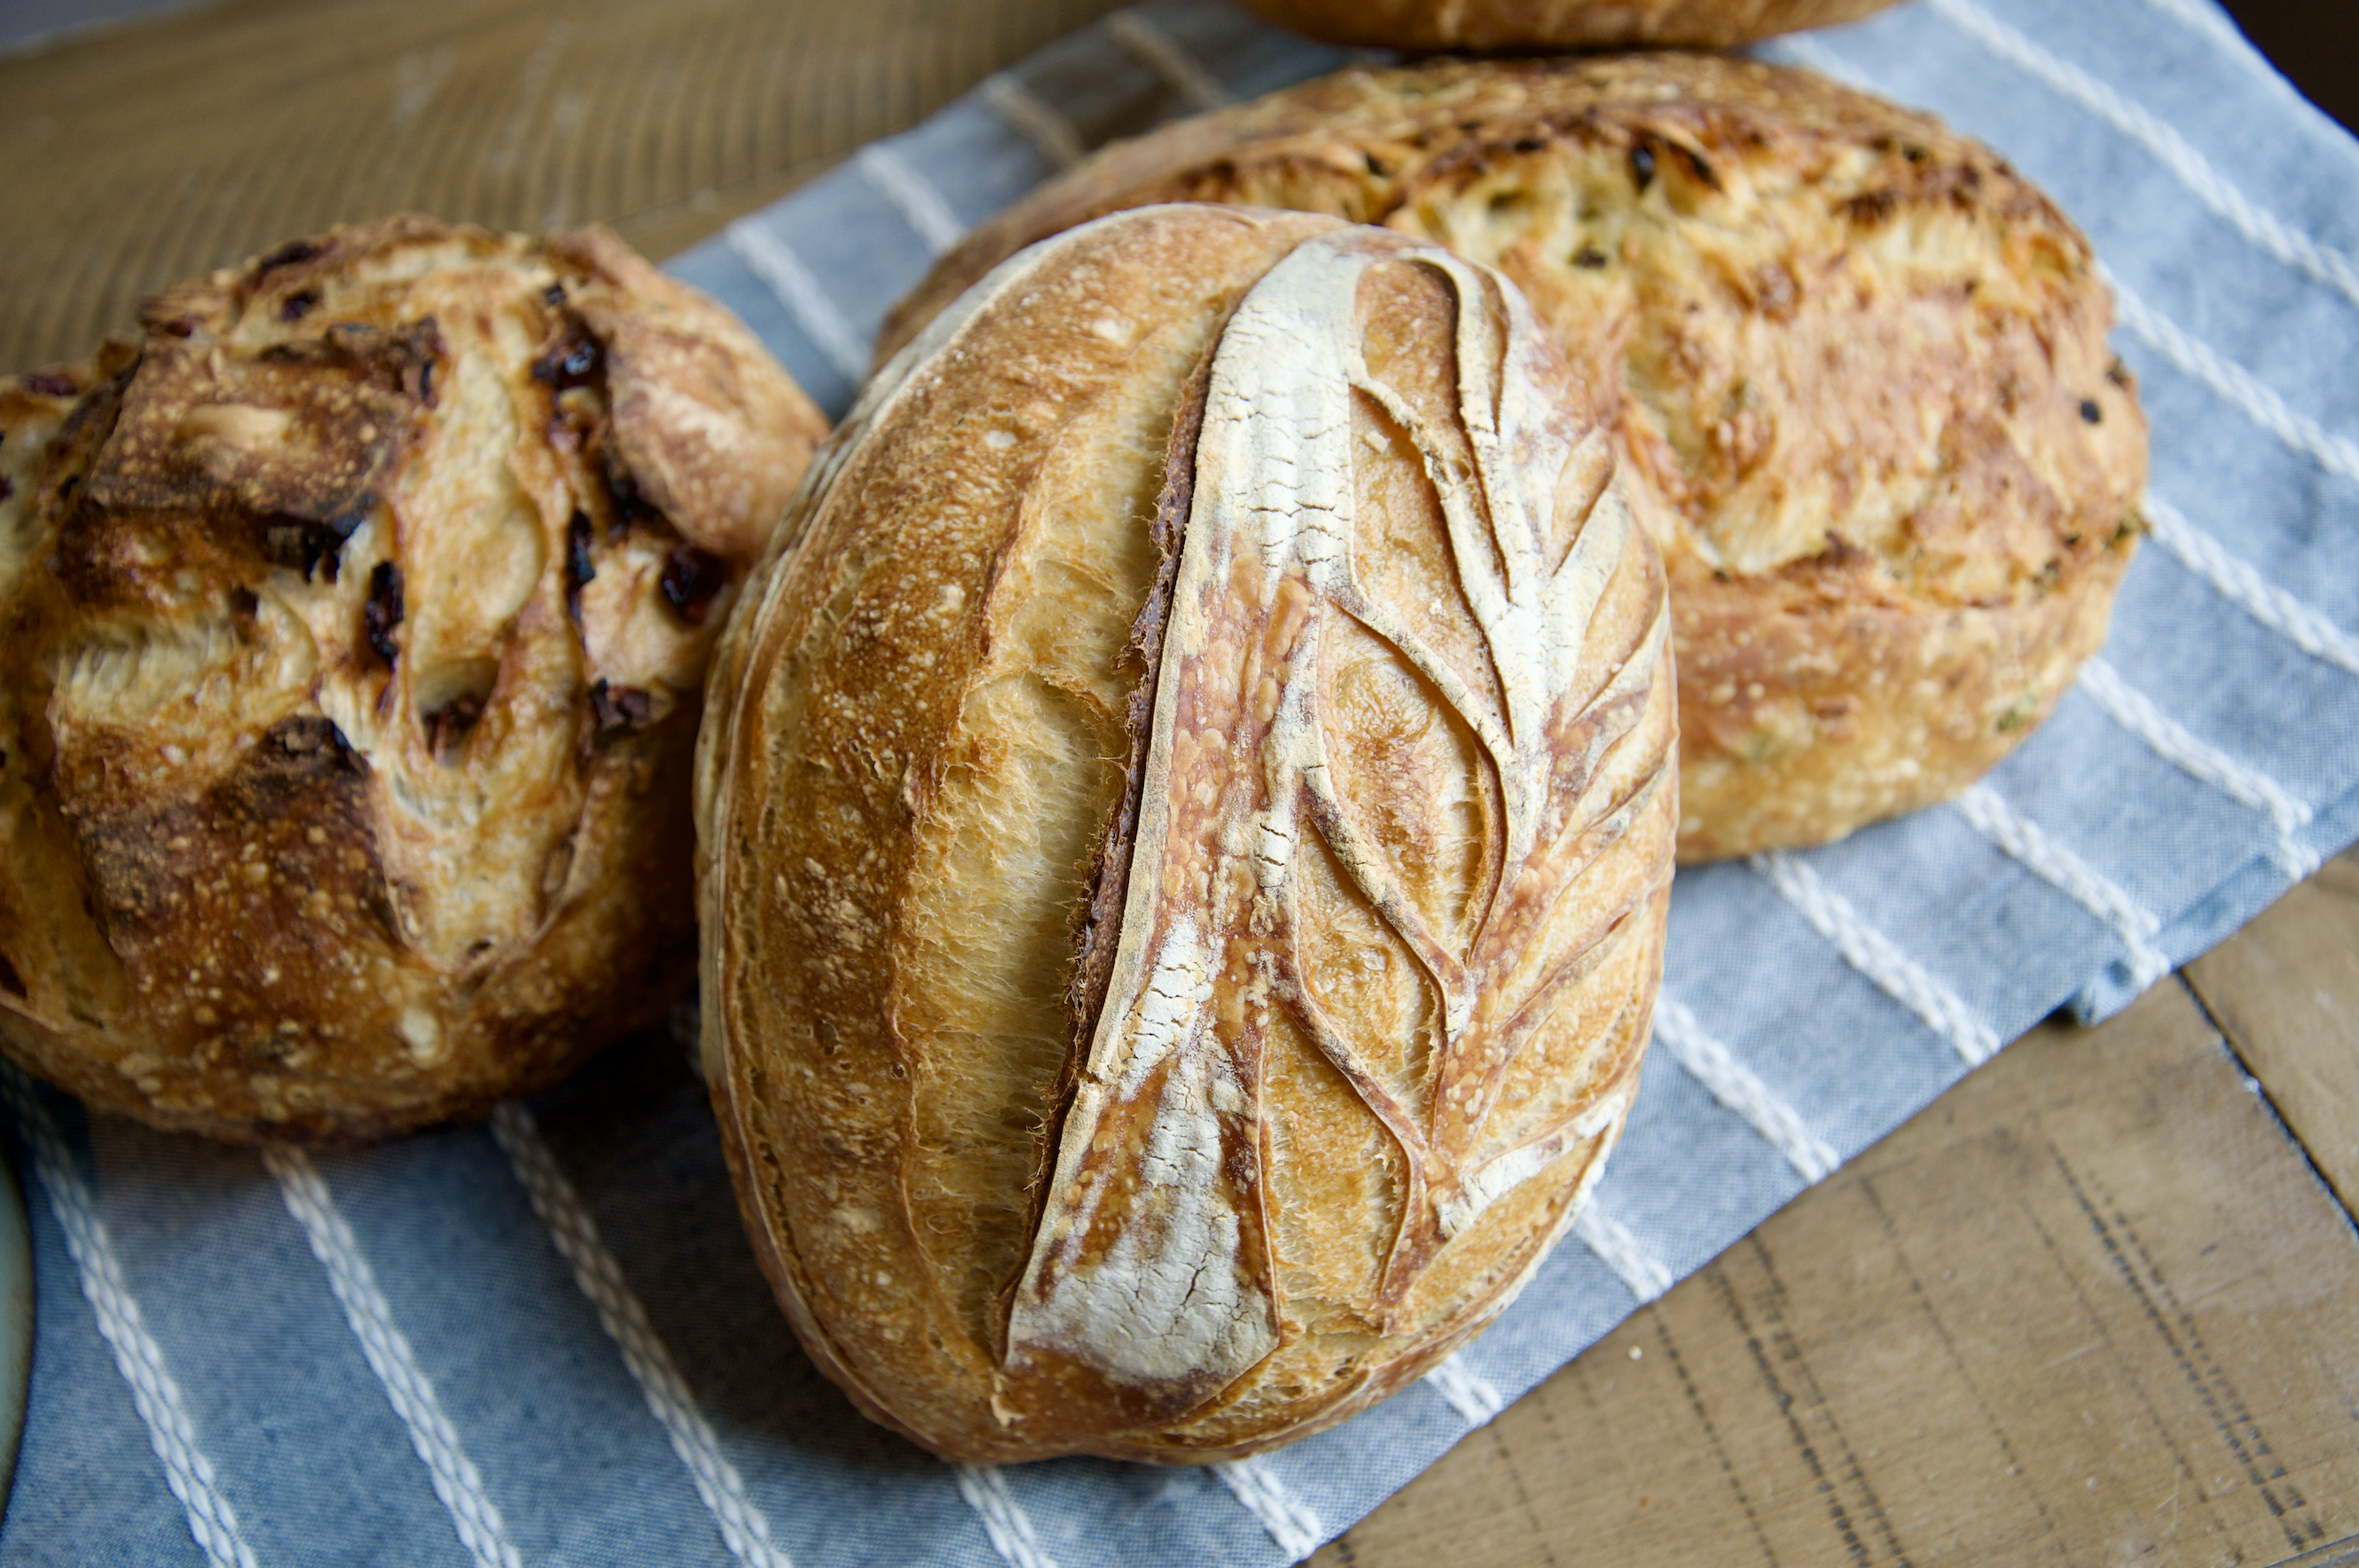 sourdough bread baker recipes classes influencer on social media @amybakesbread in Kentucky United States 8